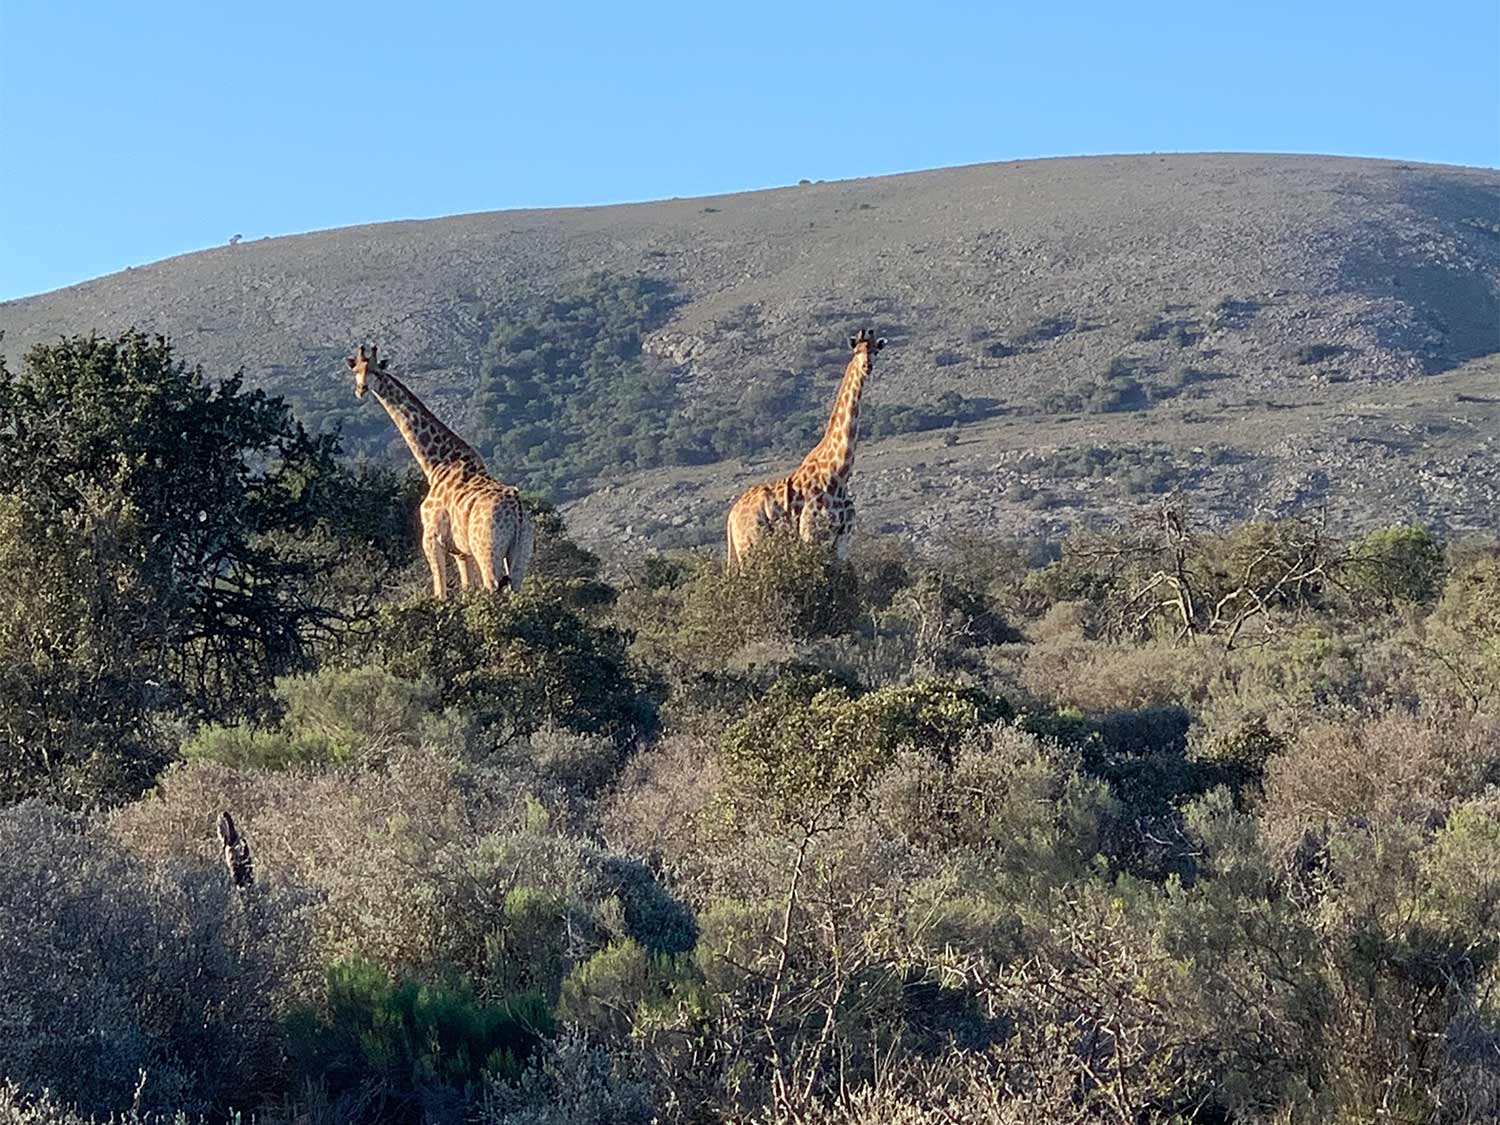 Two giraffes peeking over a brushline in Africa.